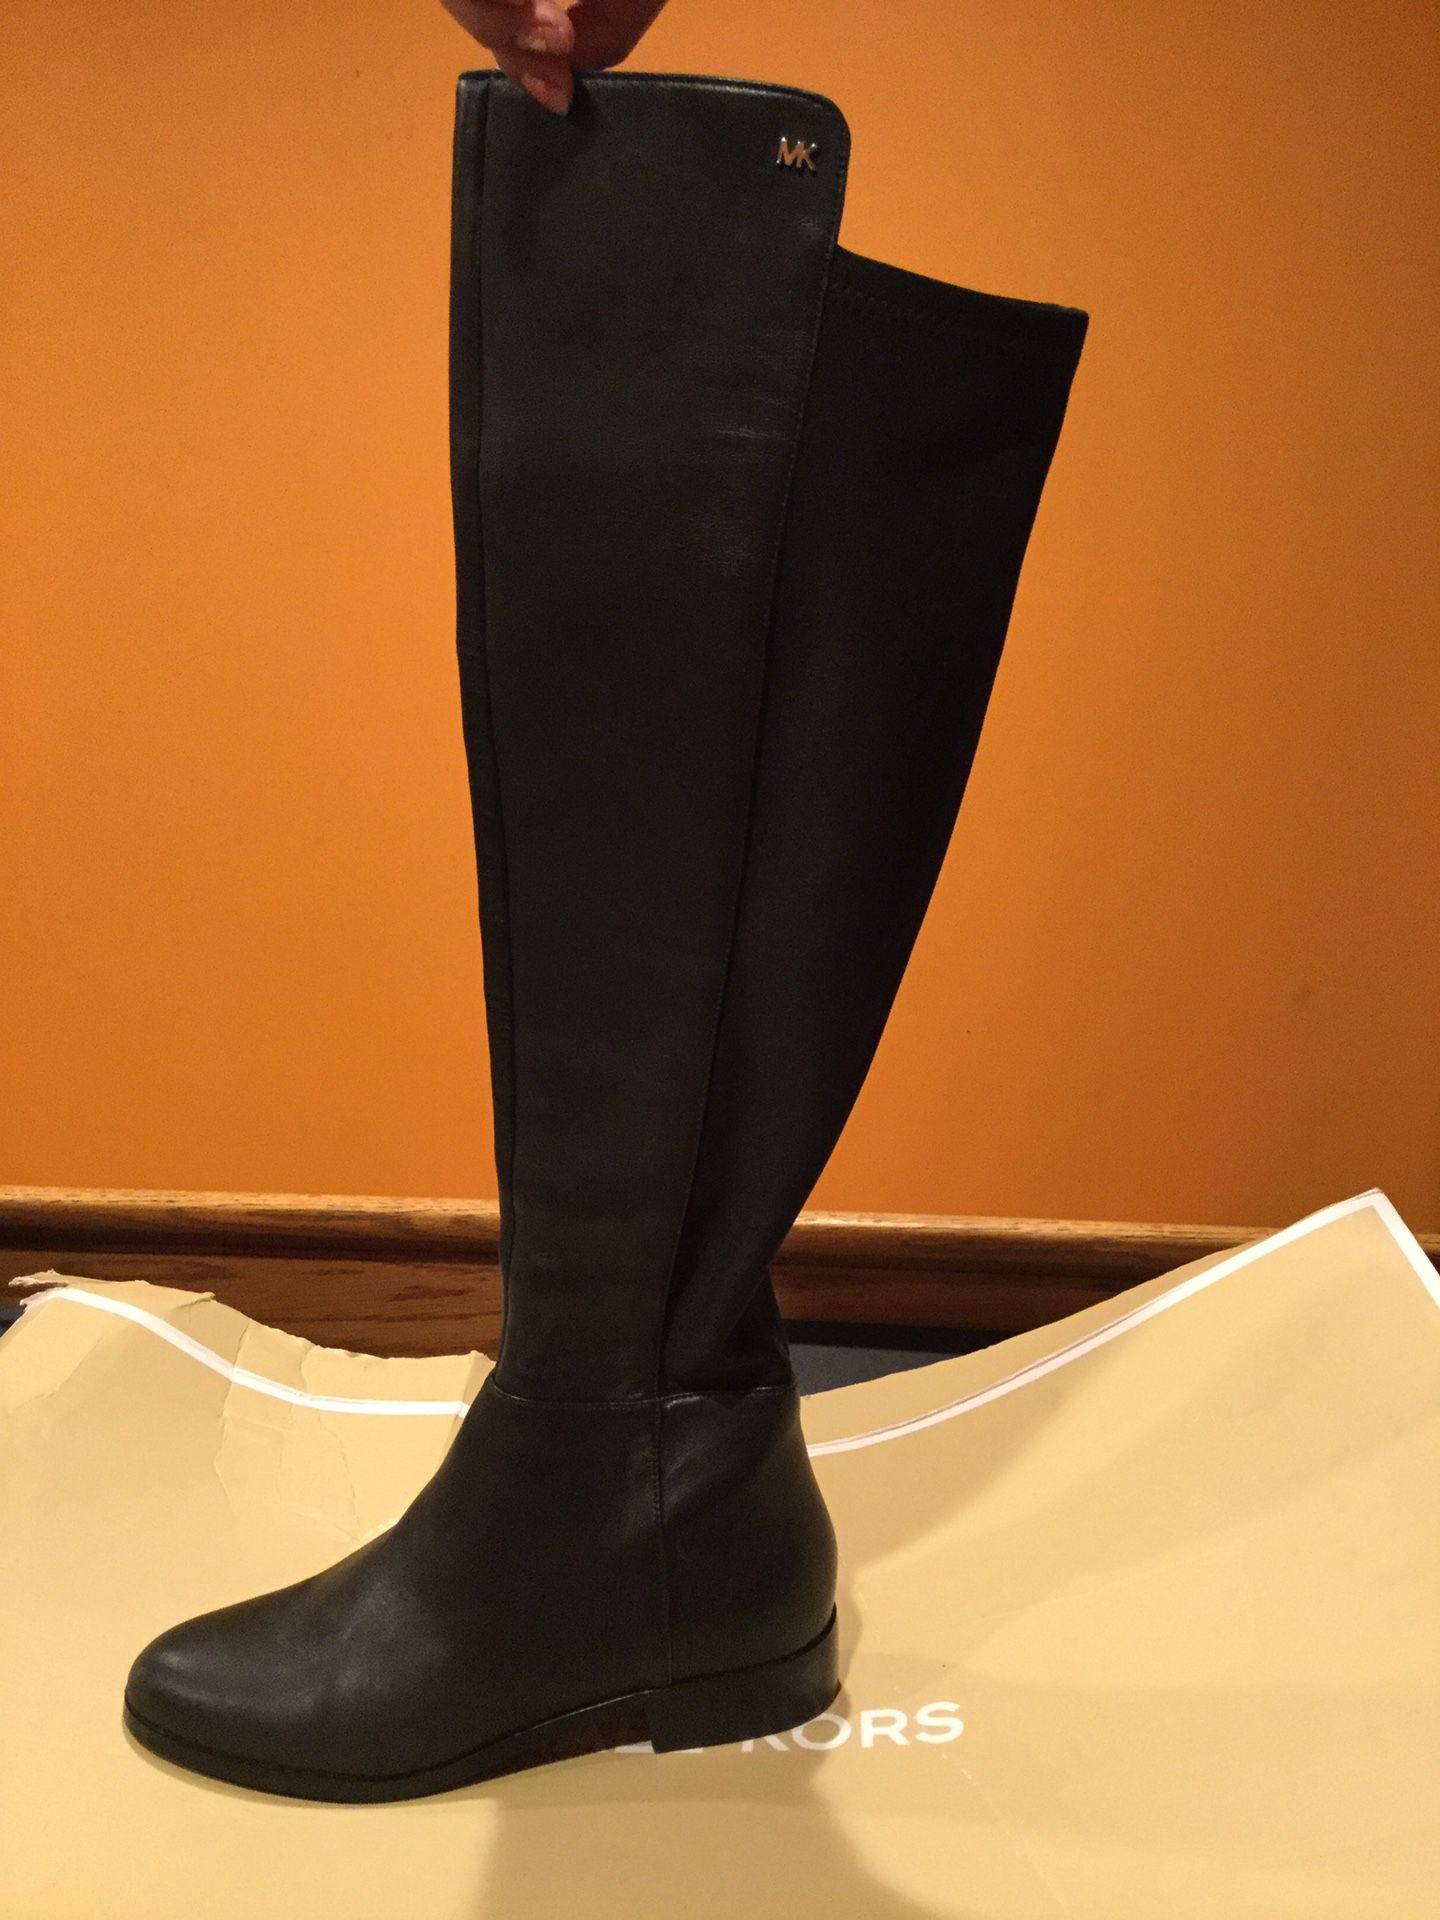 Michael Kors women boots size 6